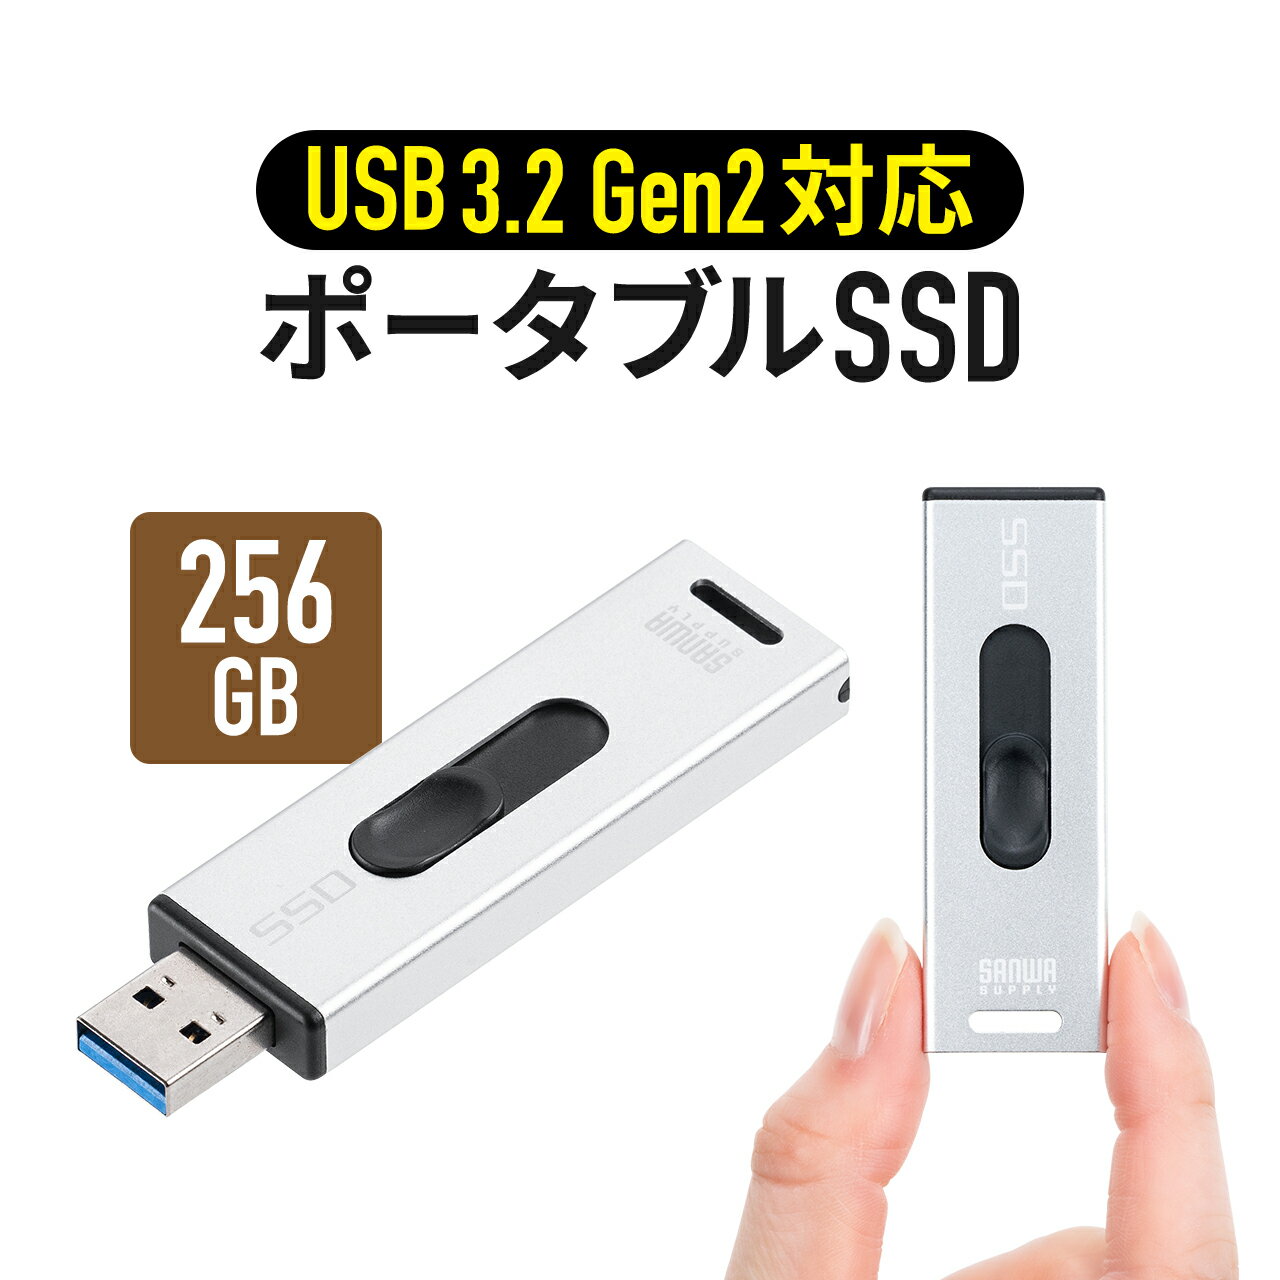 |[^uSSD 256GB Ot USB3.2 Gen2 ^ SSD er^ PS5 PS4 XboxSeriesX gXg[W XCh }